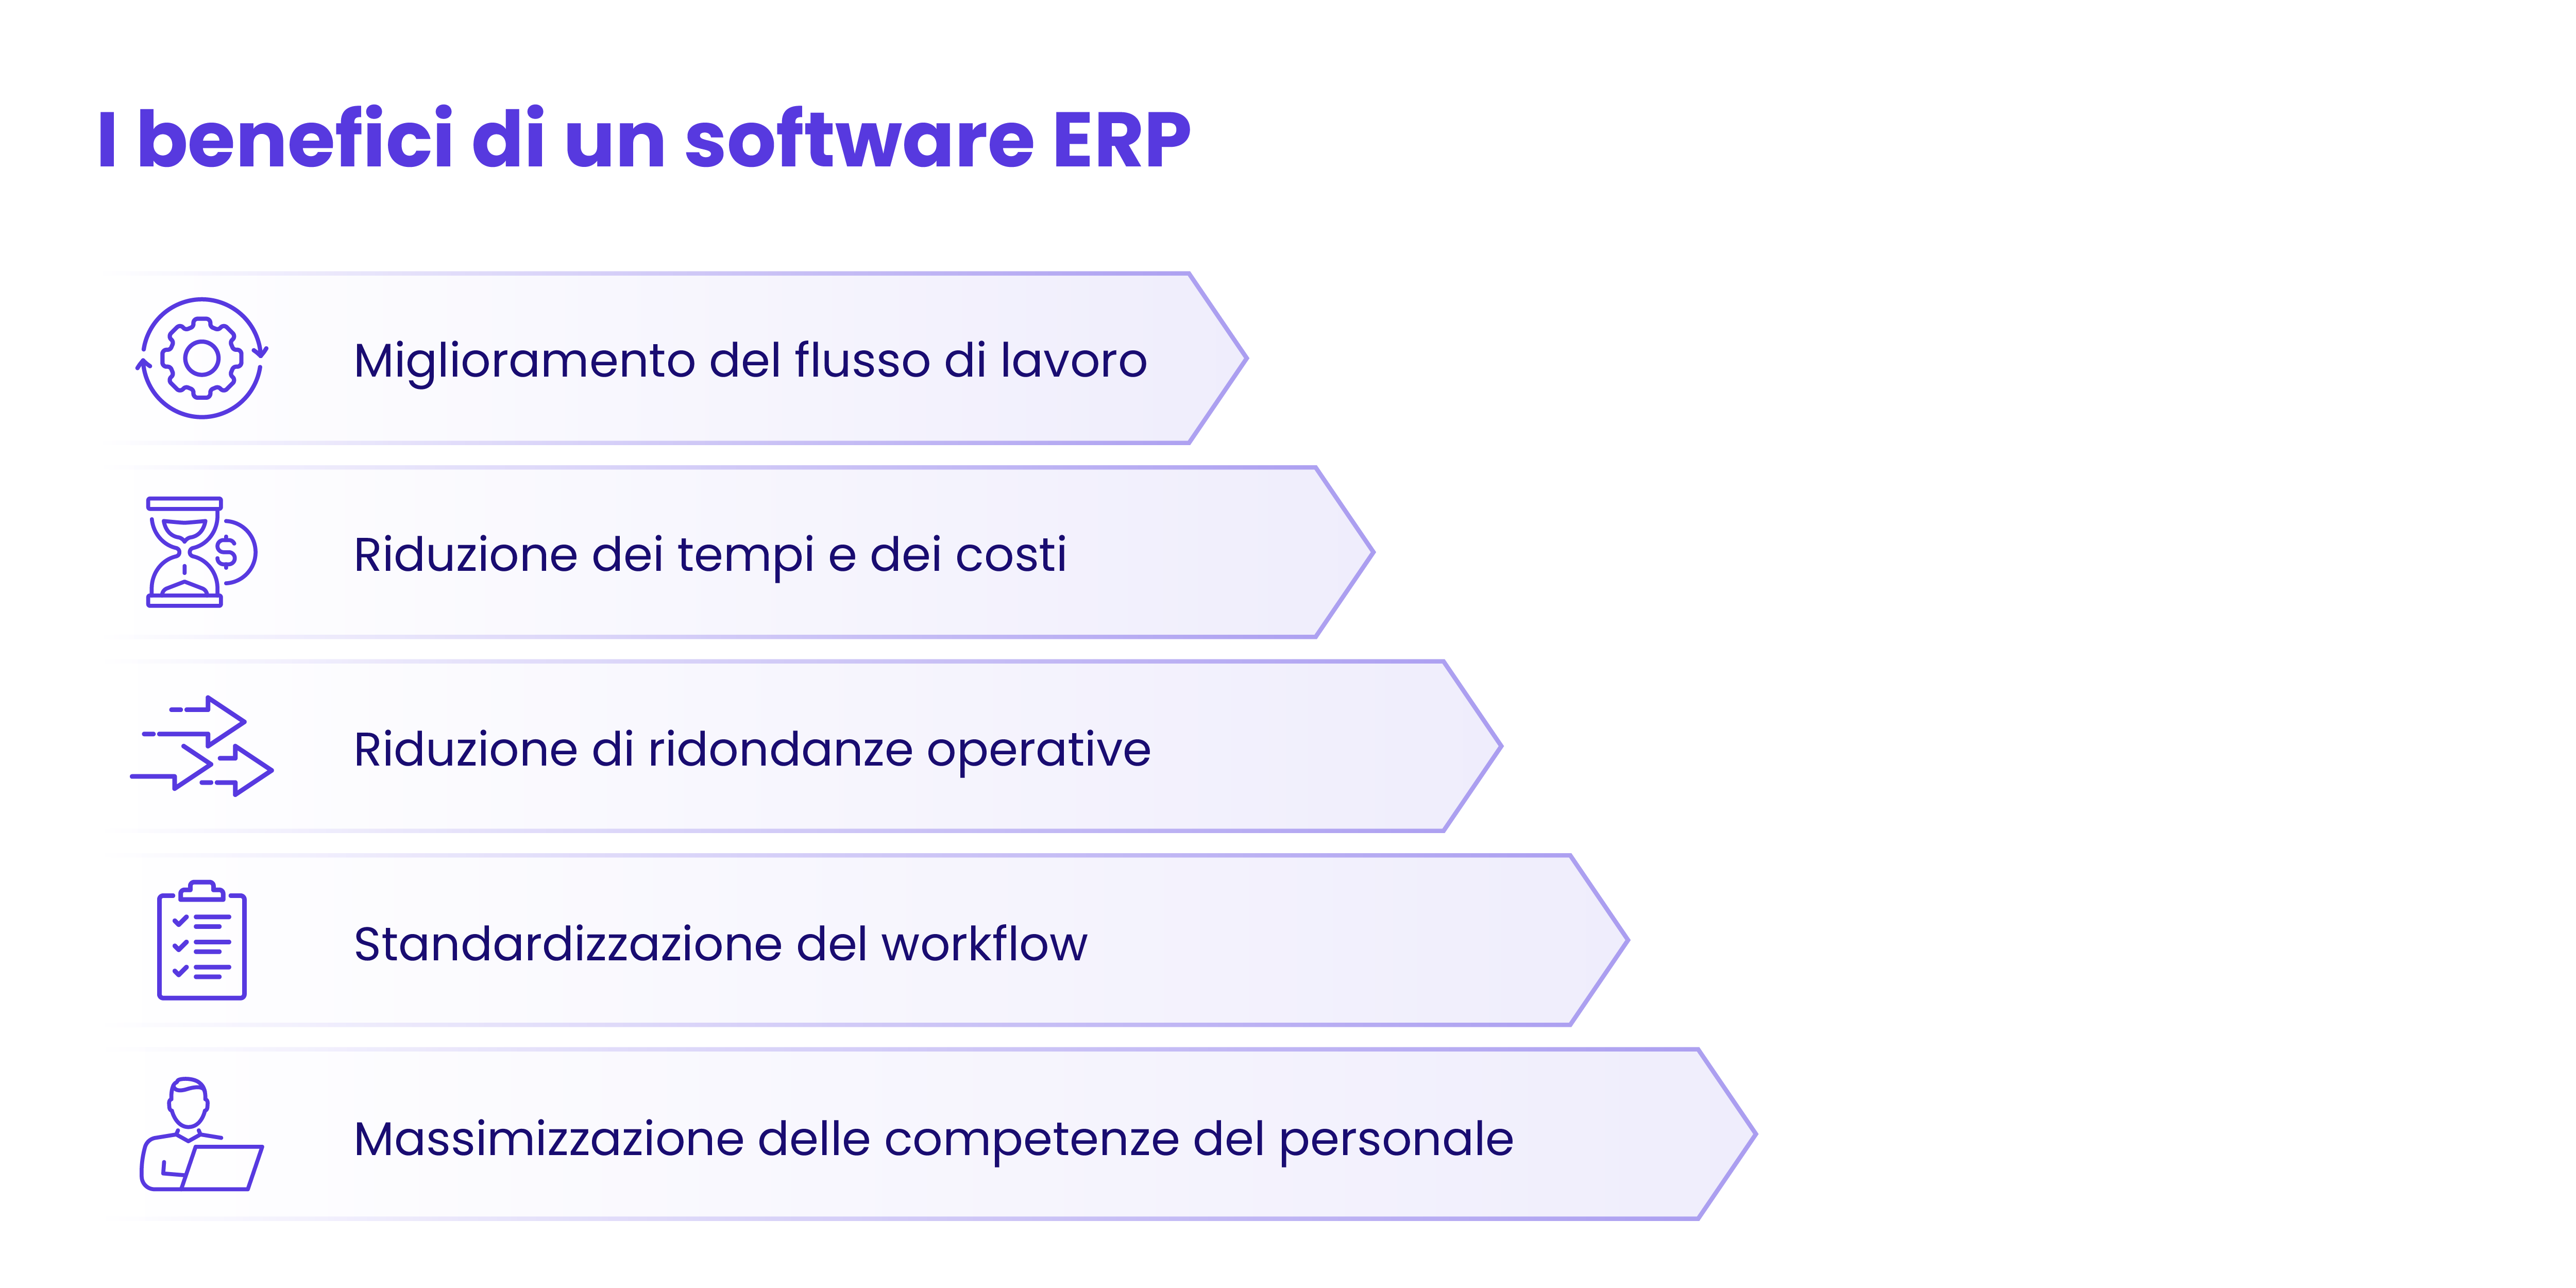 i benefici di un software ERP